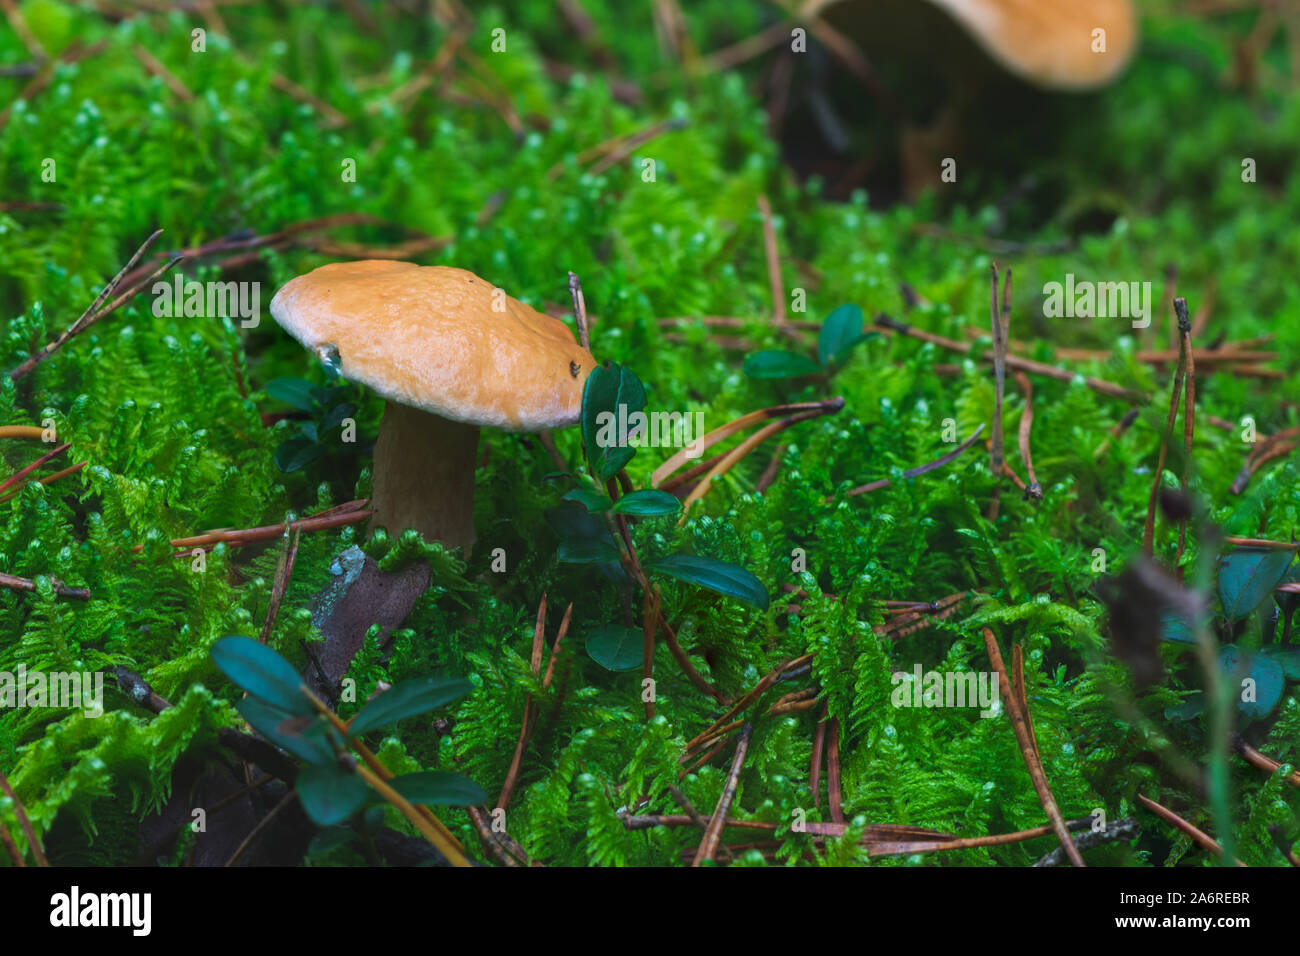 Forest edible mushroom photograph captured in autumn season, Europe, Lithuania. Stock Photo